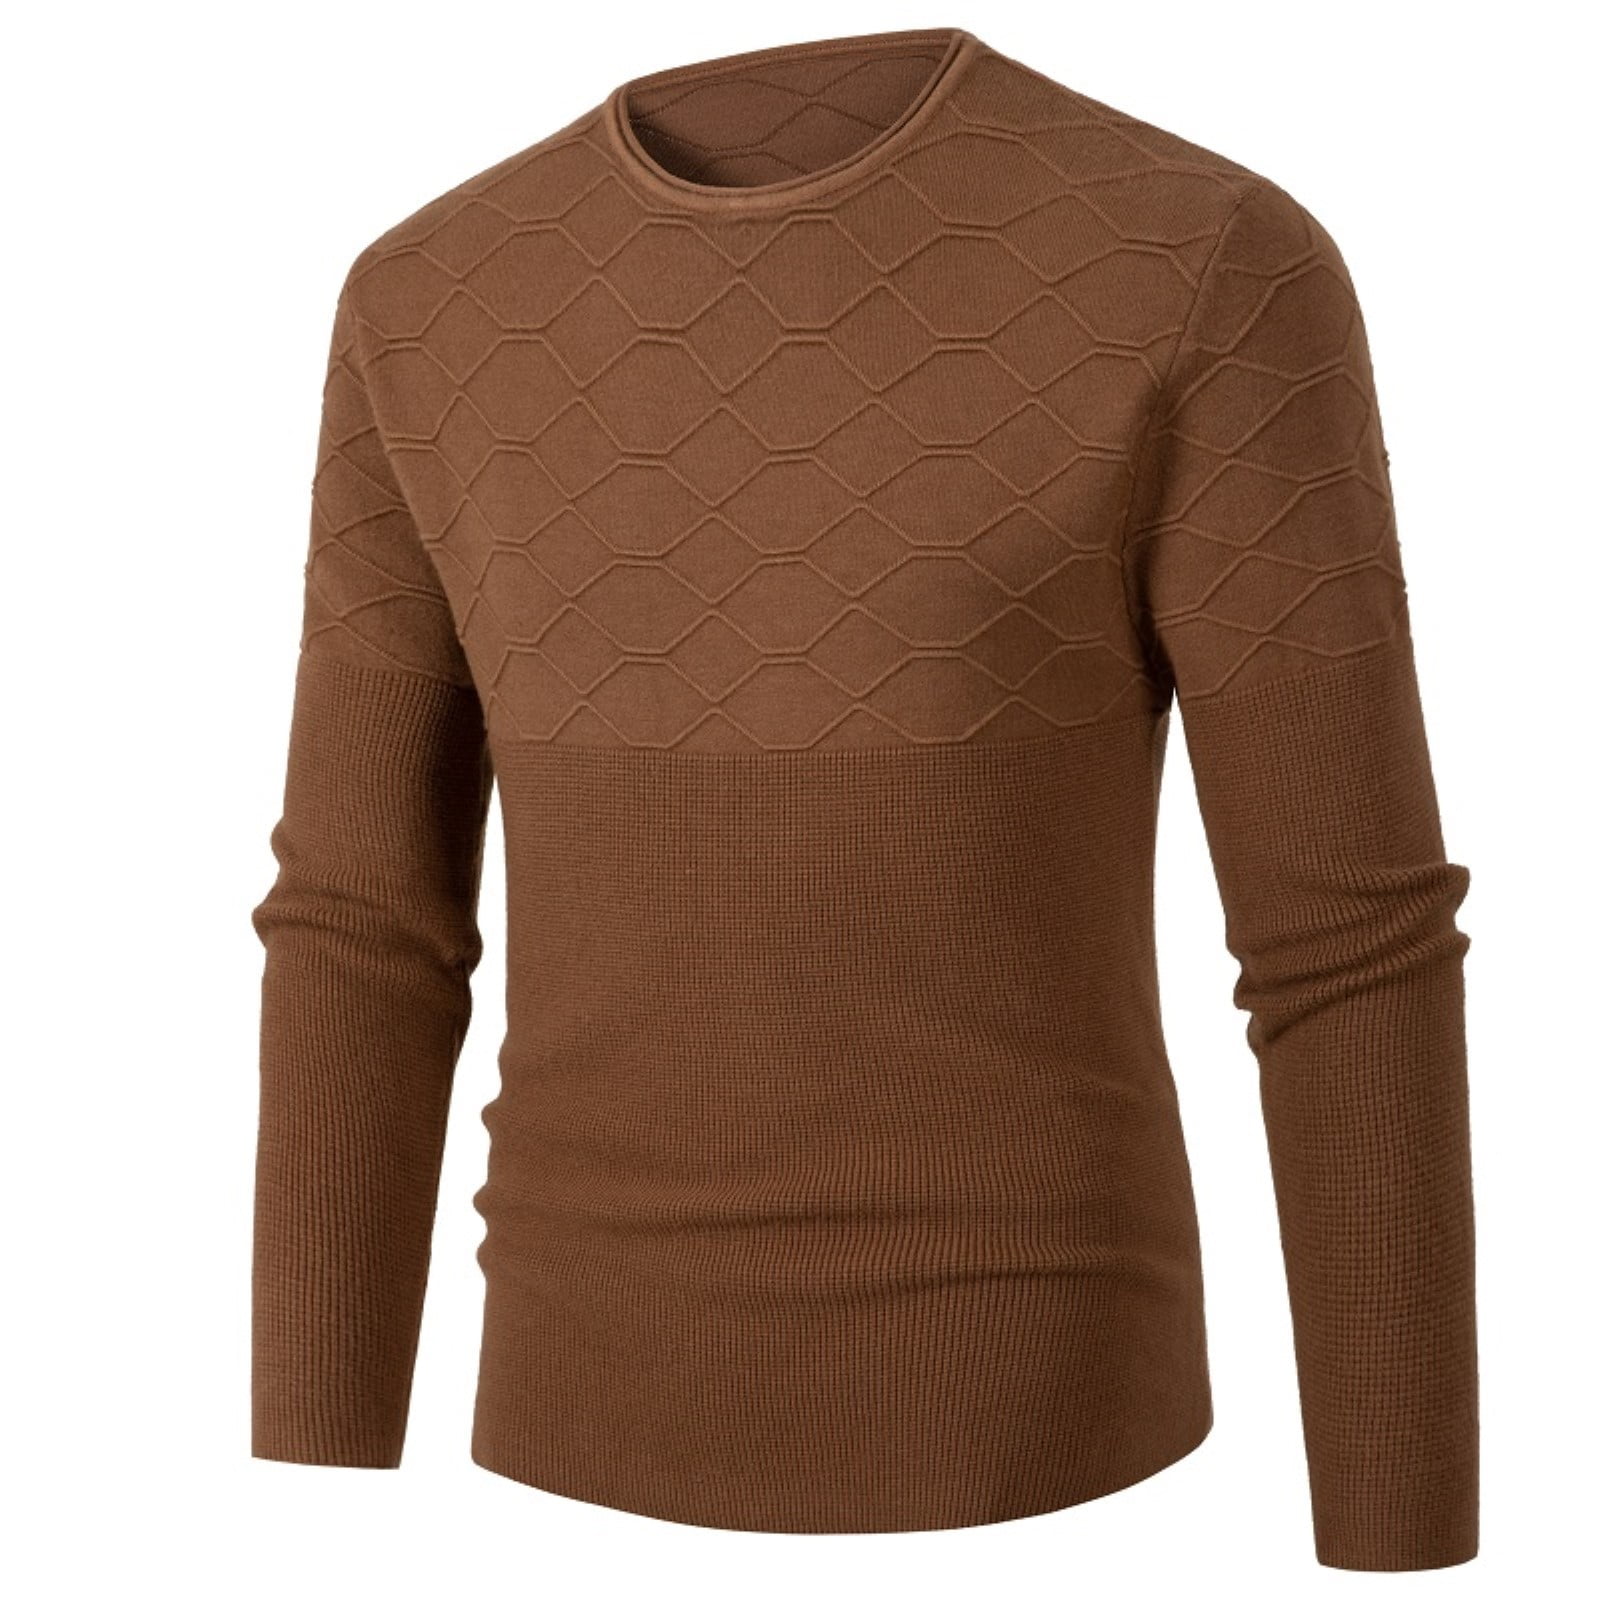 fvwitlyh Plus Size Sweaters Men's Lightweight Merino Wool Pullover ...